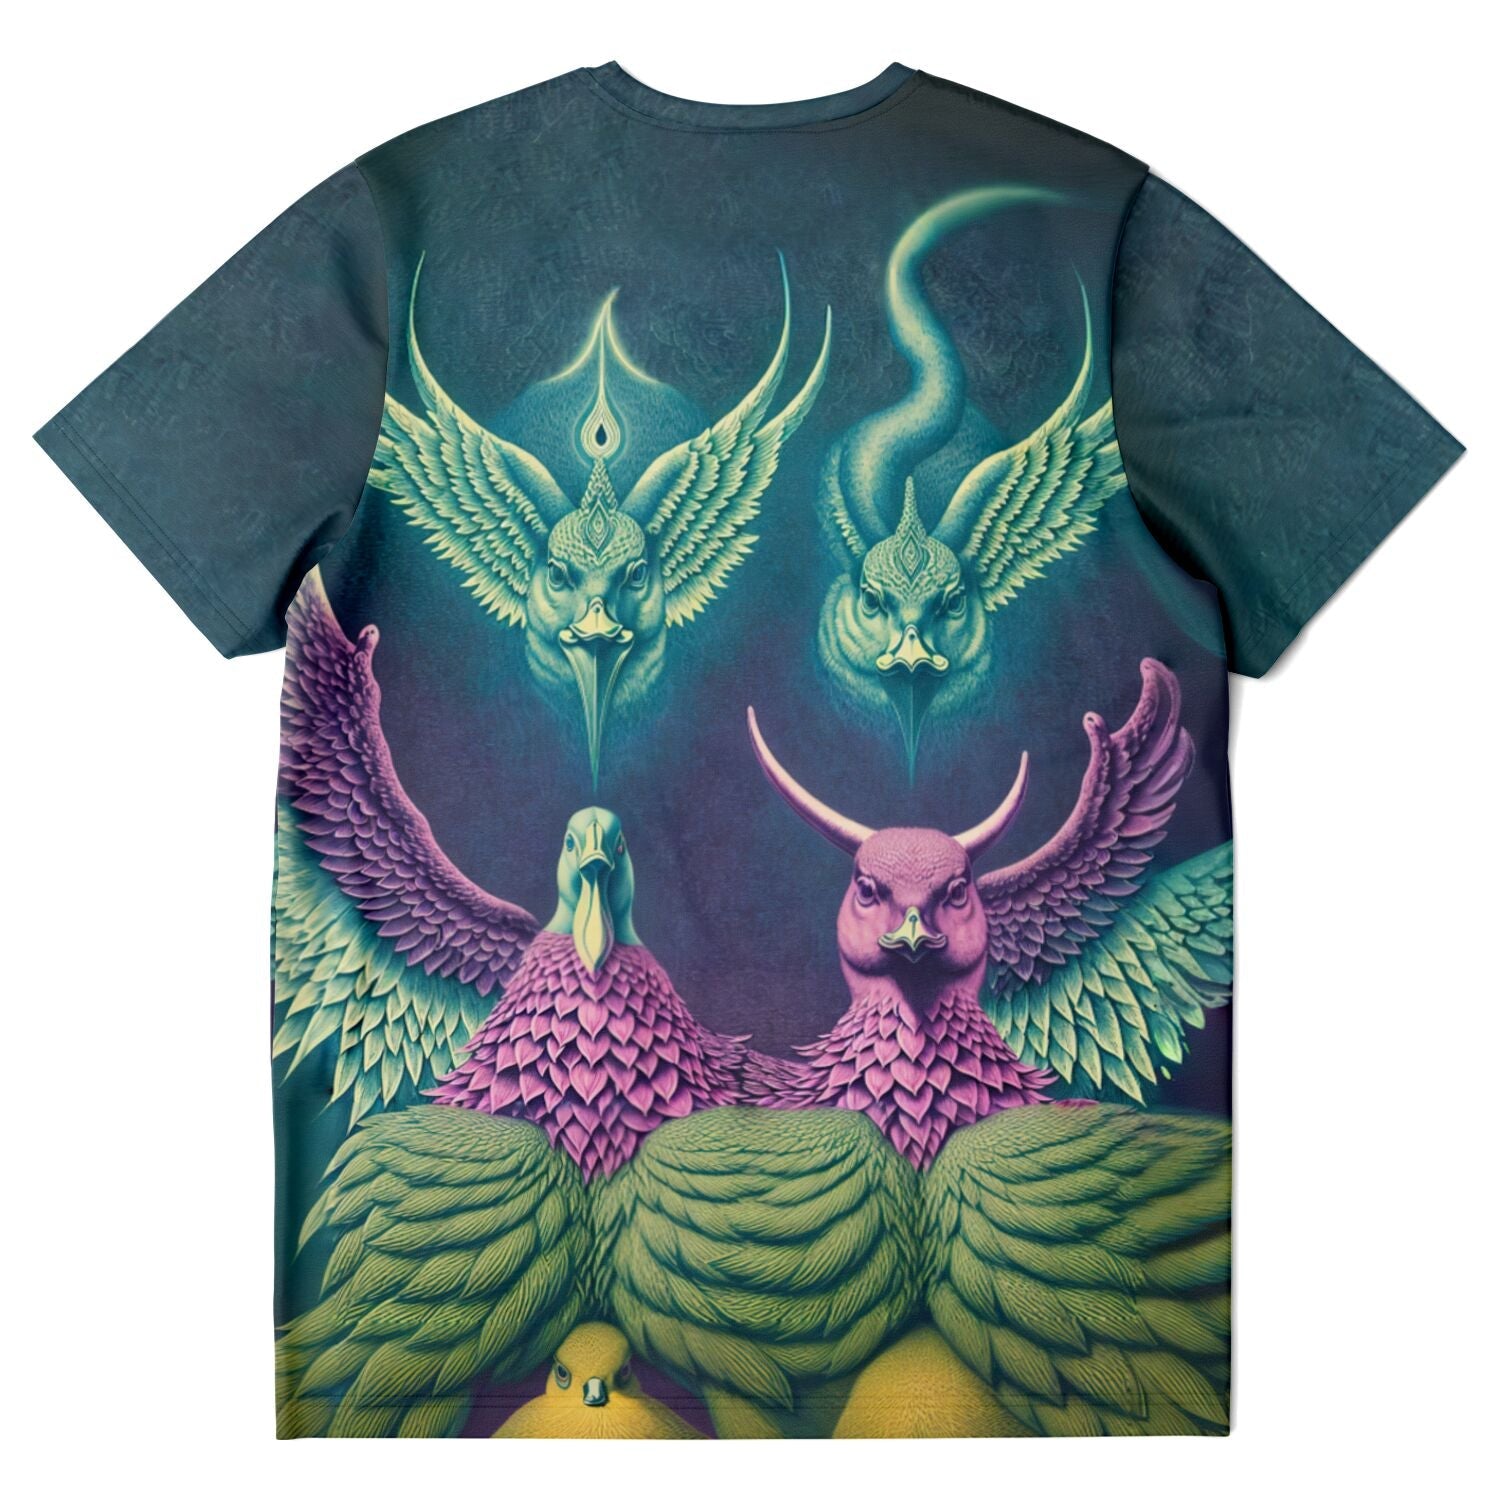 T-shirt XS Duck Baphomet: Neopagan Surreal Mythology | Balance, Strength, Peace | Mysterious Avian Deity | Occult Graphic Art T-Shirt